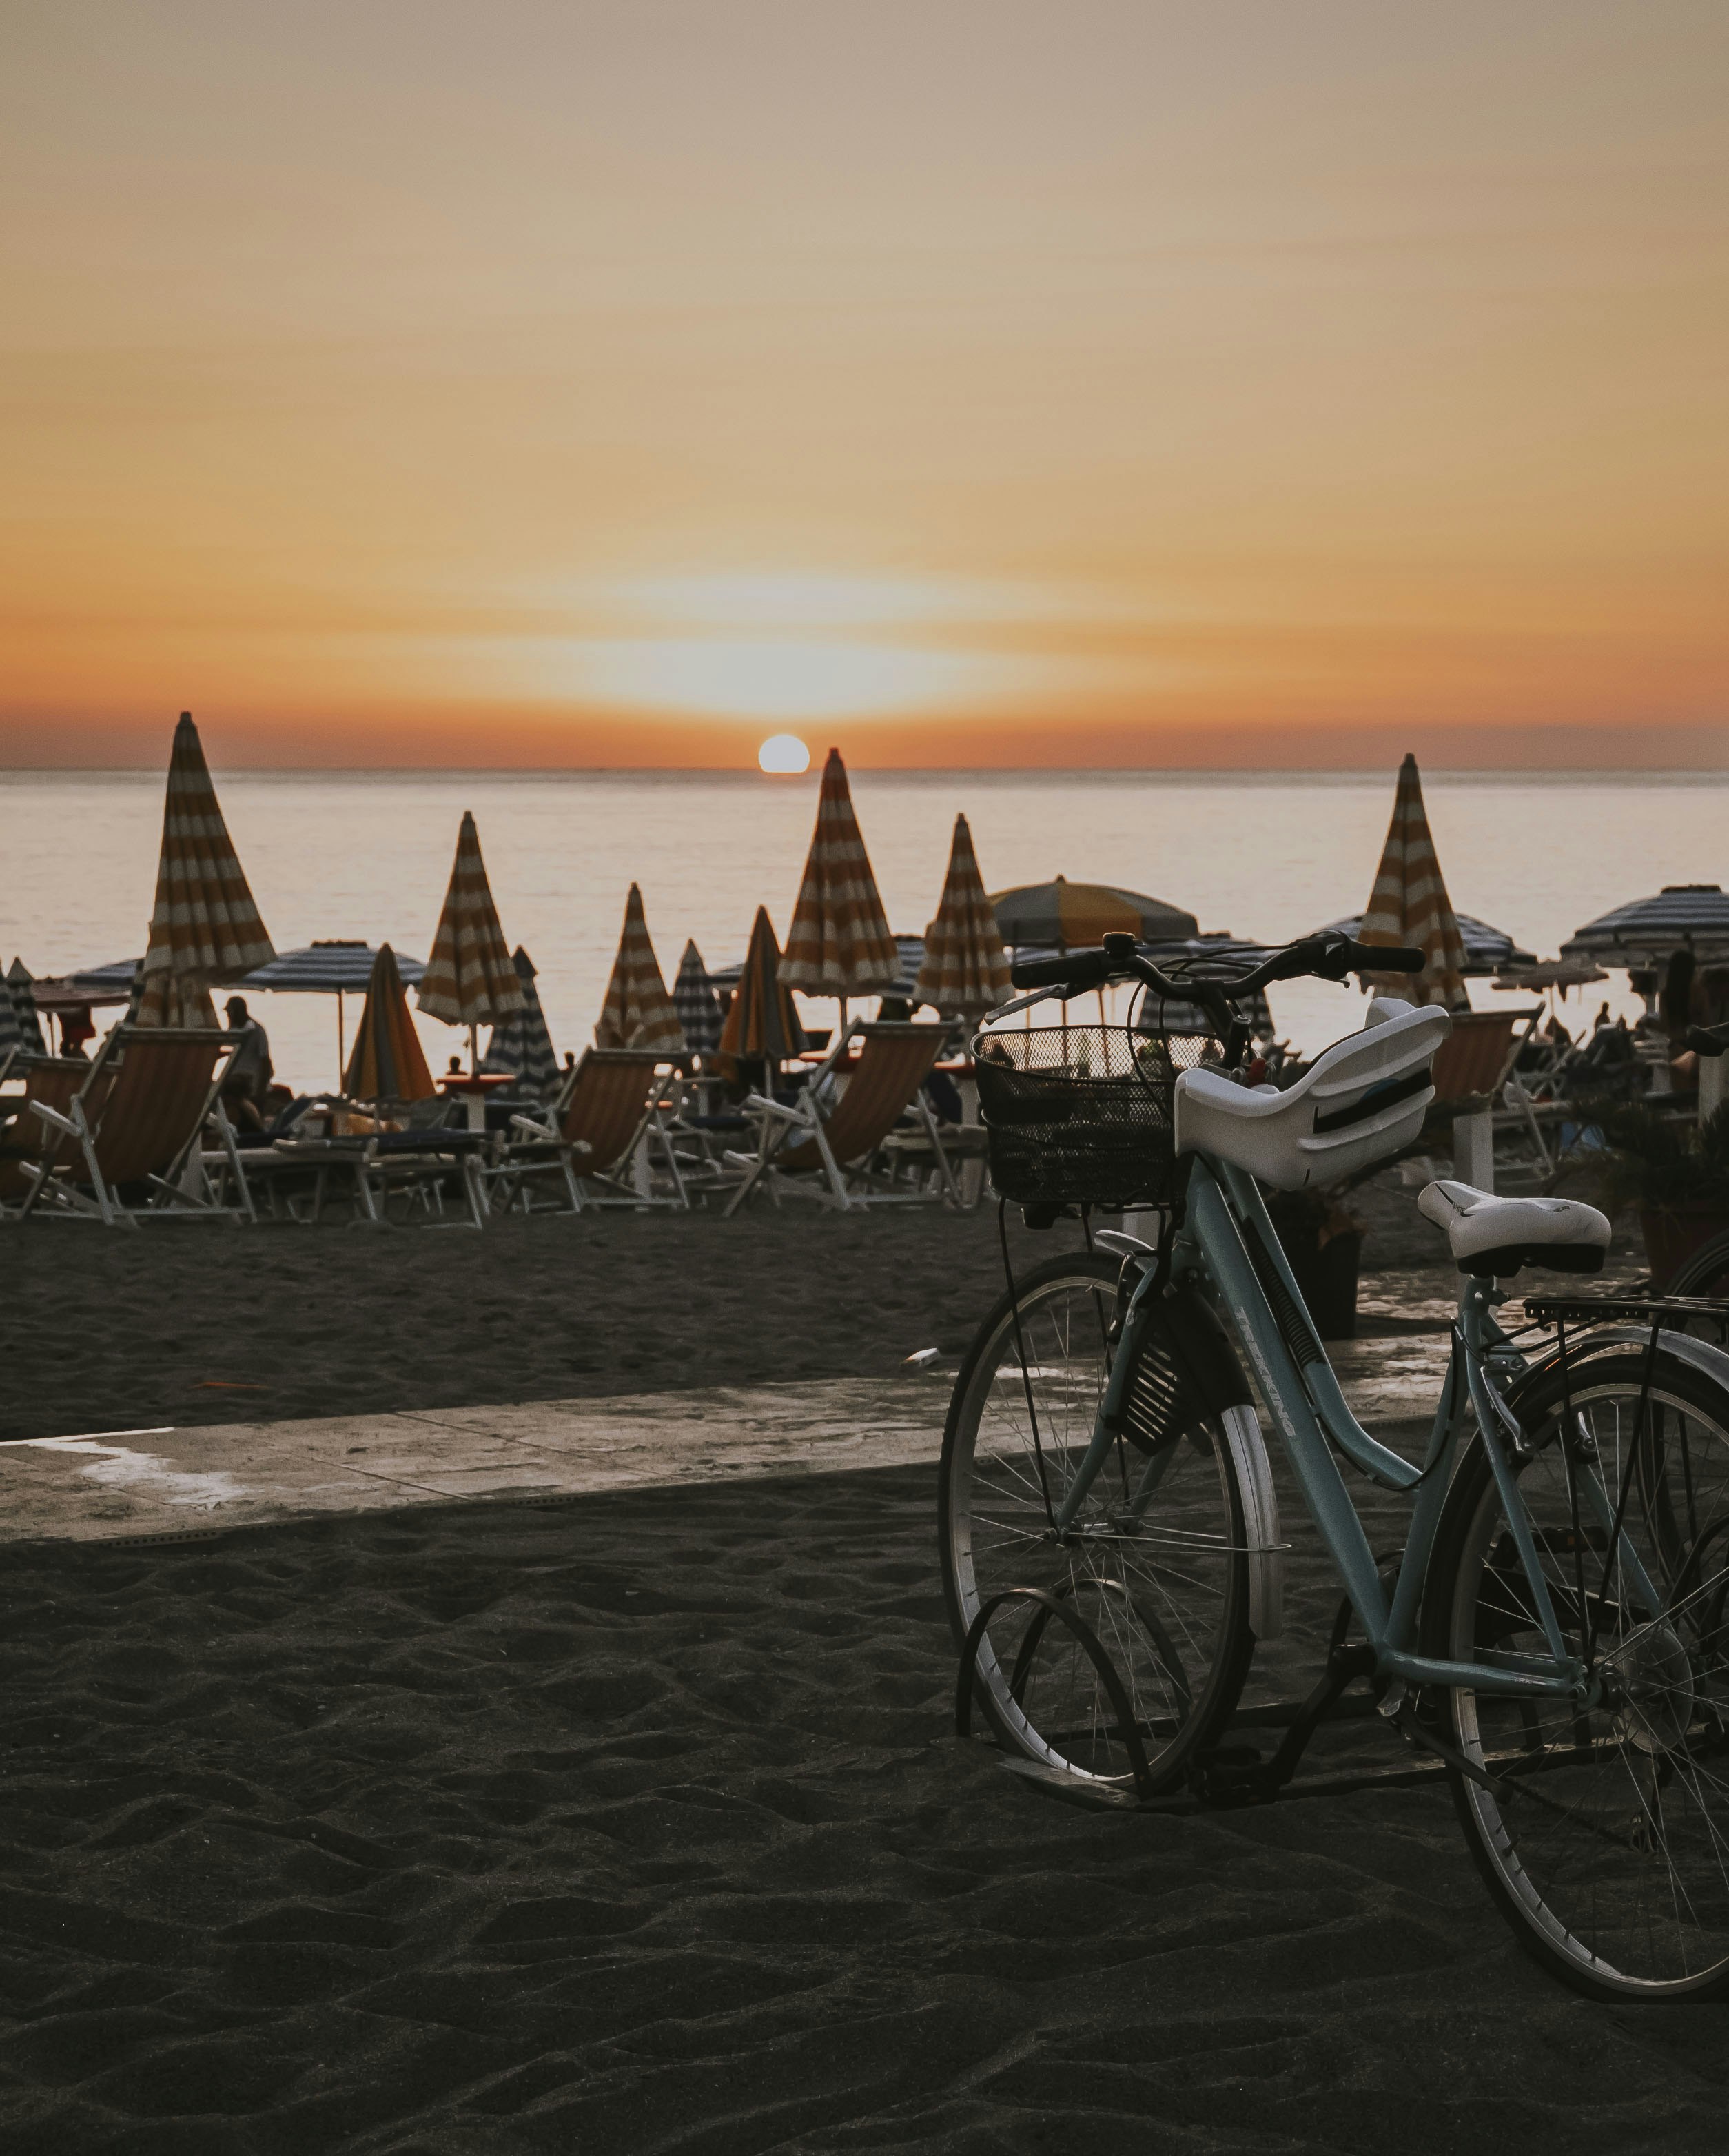 black city bike on beach during sunset